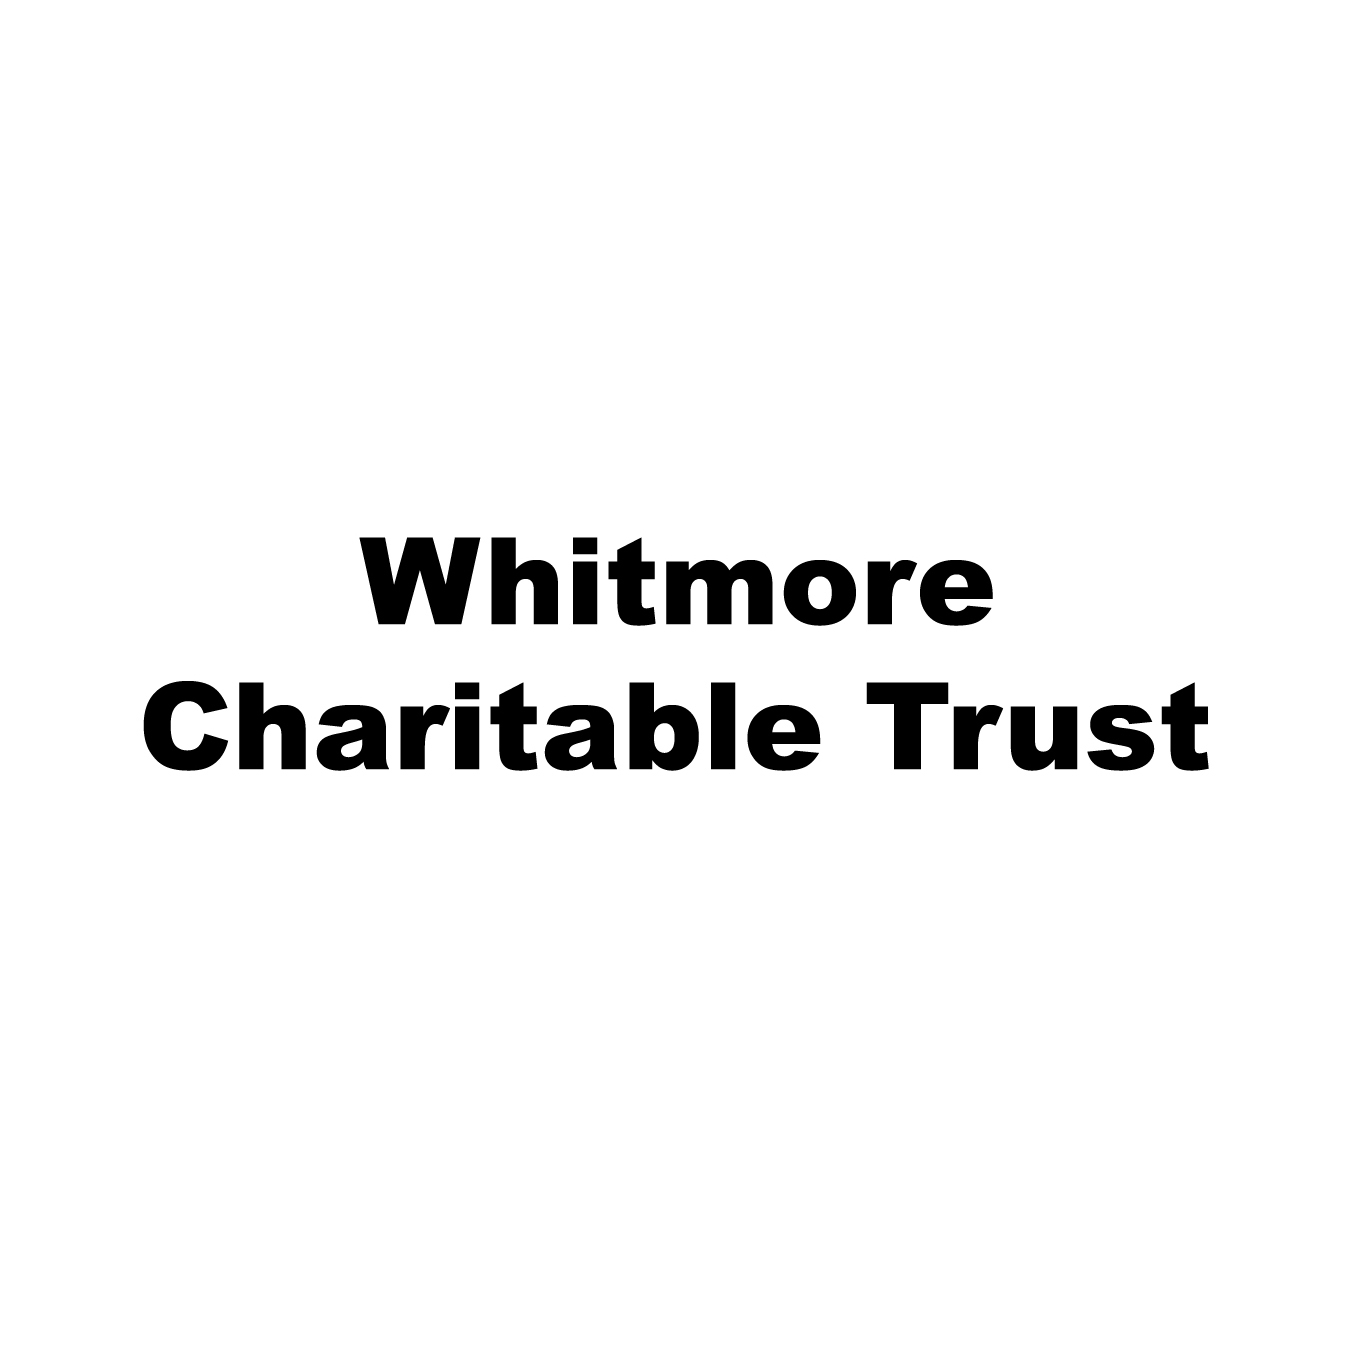 Whitmore Charitable Trust